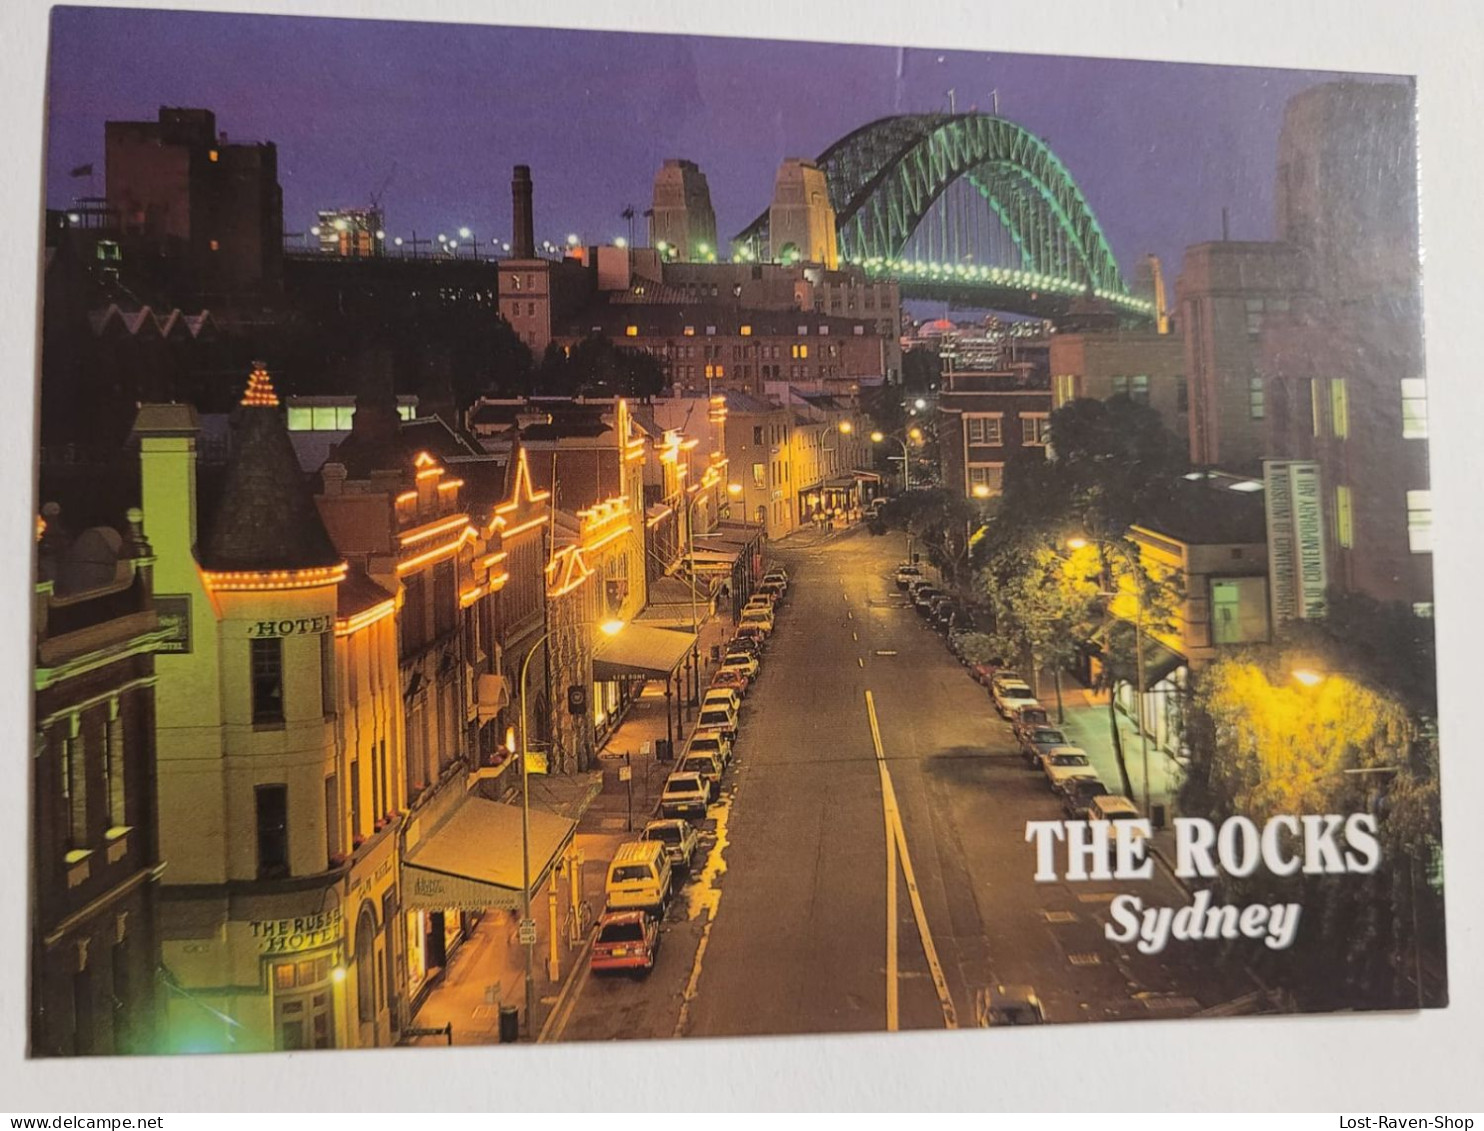 The Rocks Sydney - Sydney